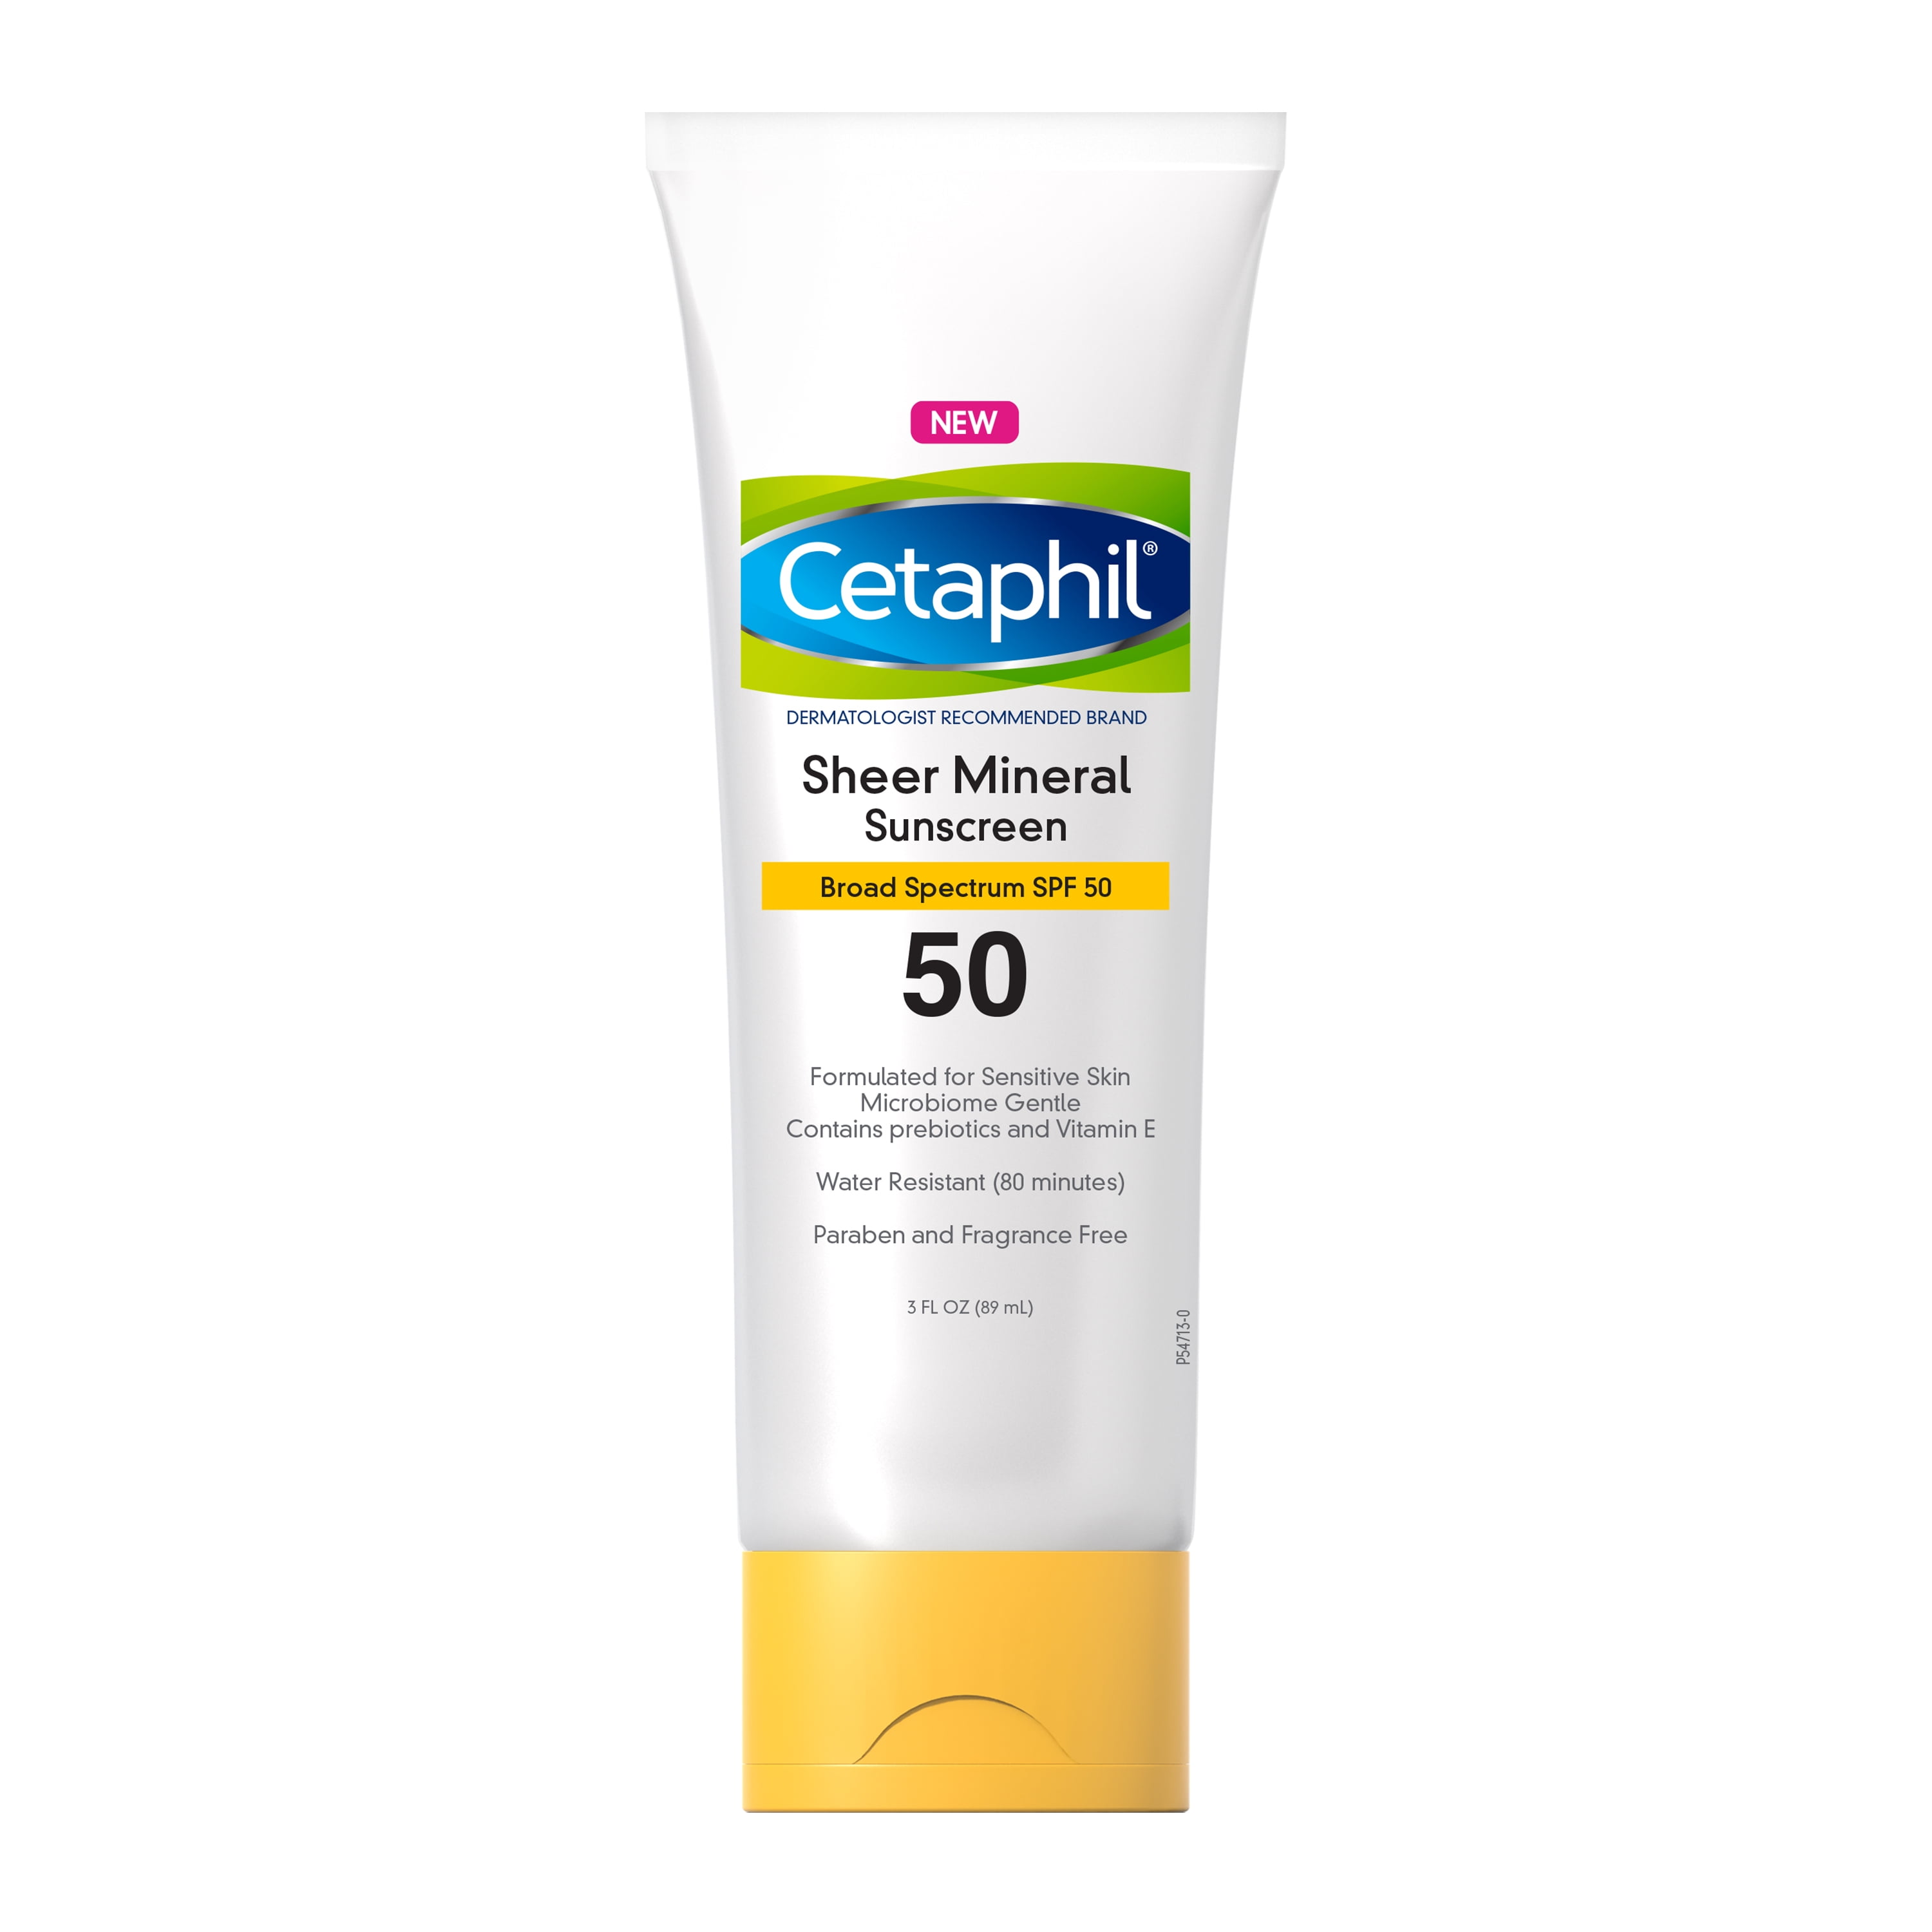 Cetaphil Sunscreen - Homecare24